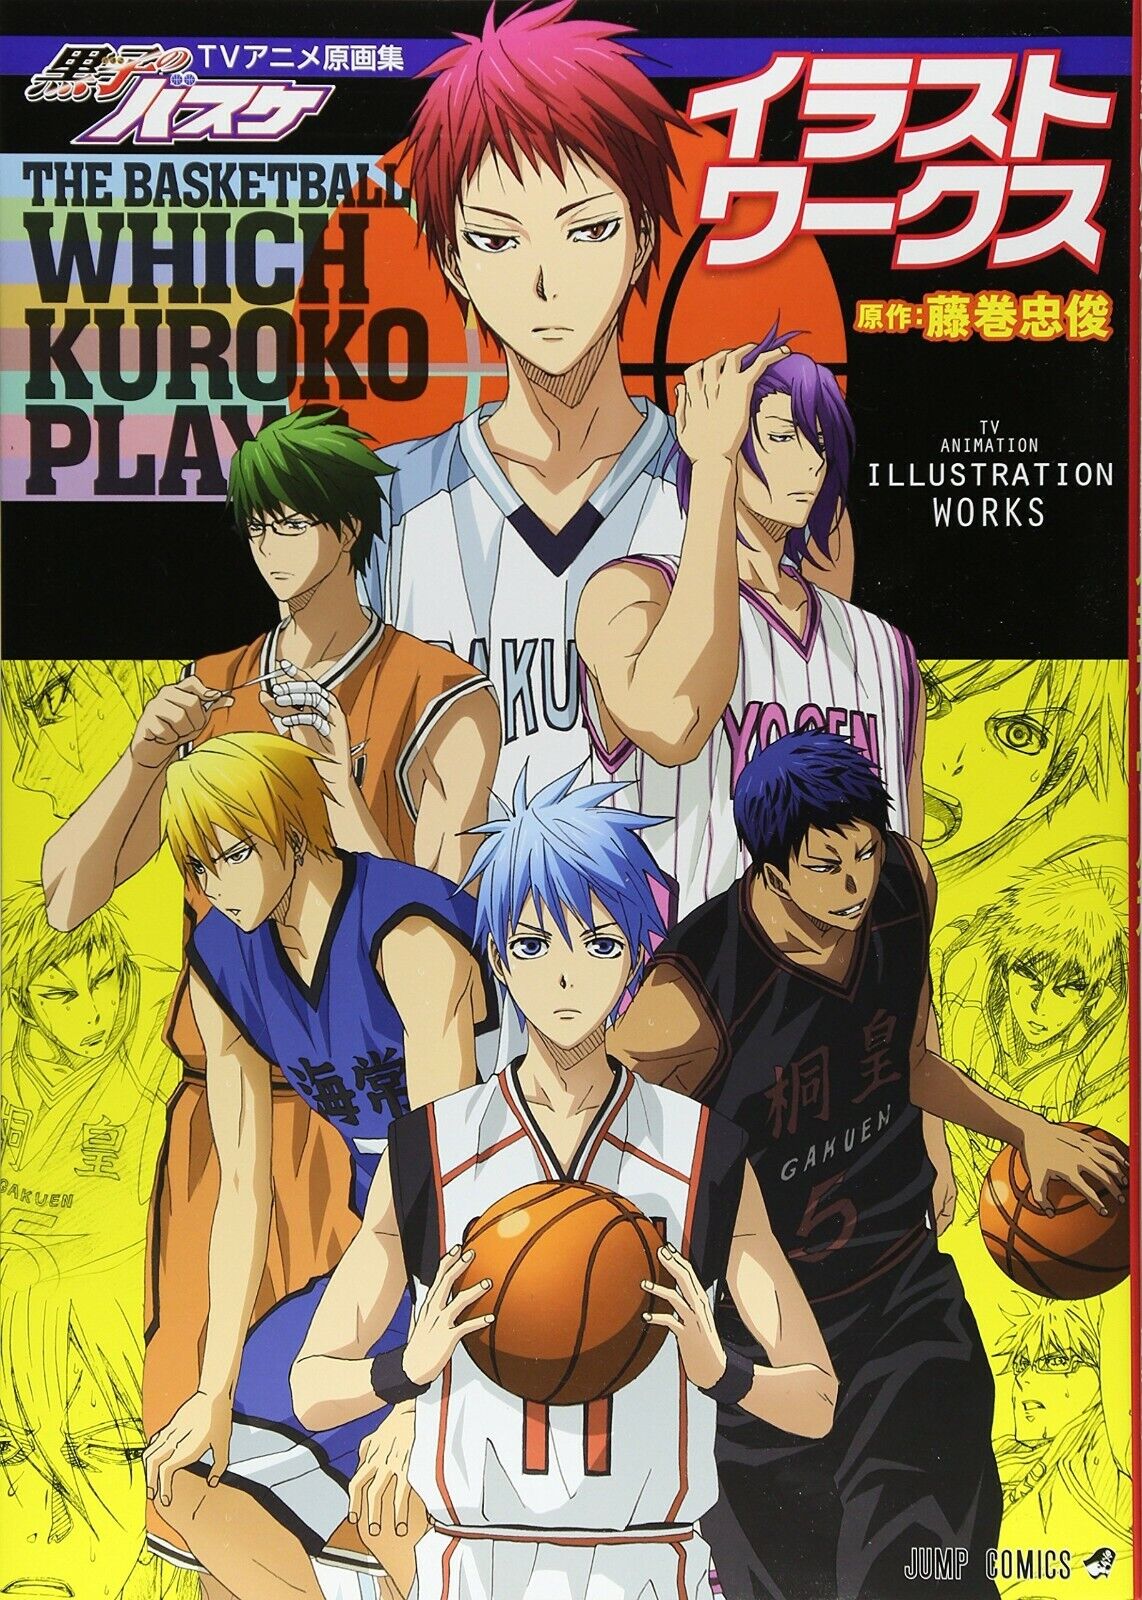 JAPAN Kuroko\'s Basketball Kuroko no Basuke TV Anime Gengashuu Illustration Works